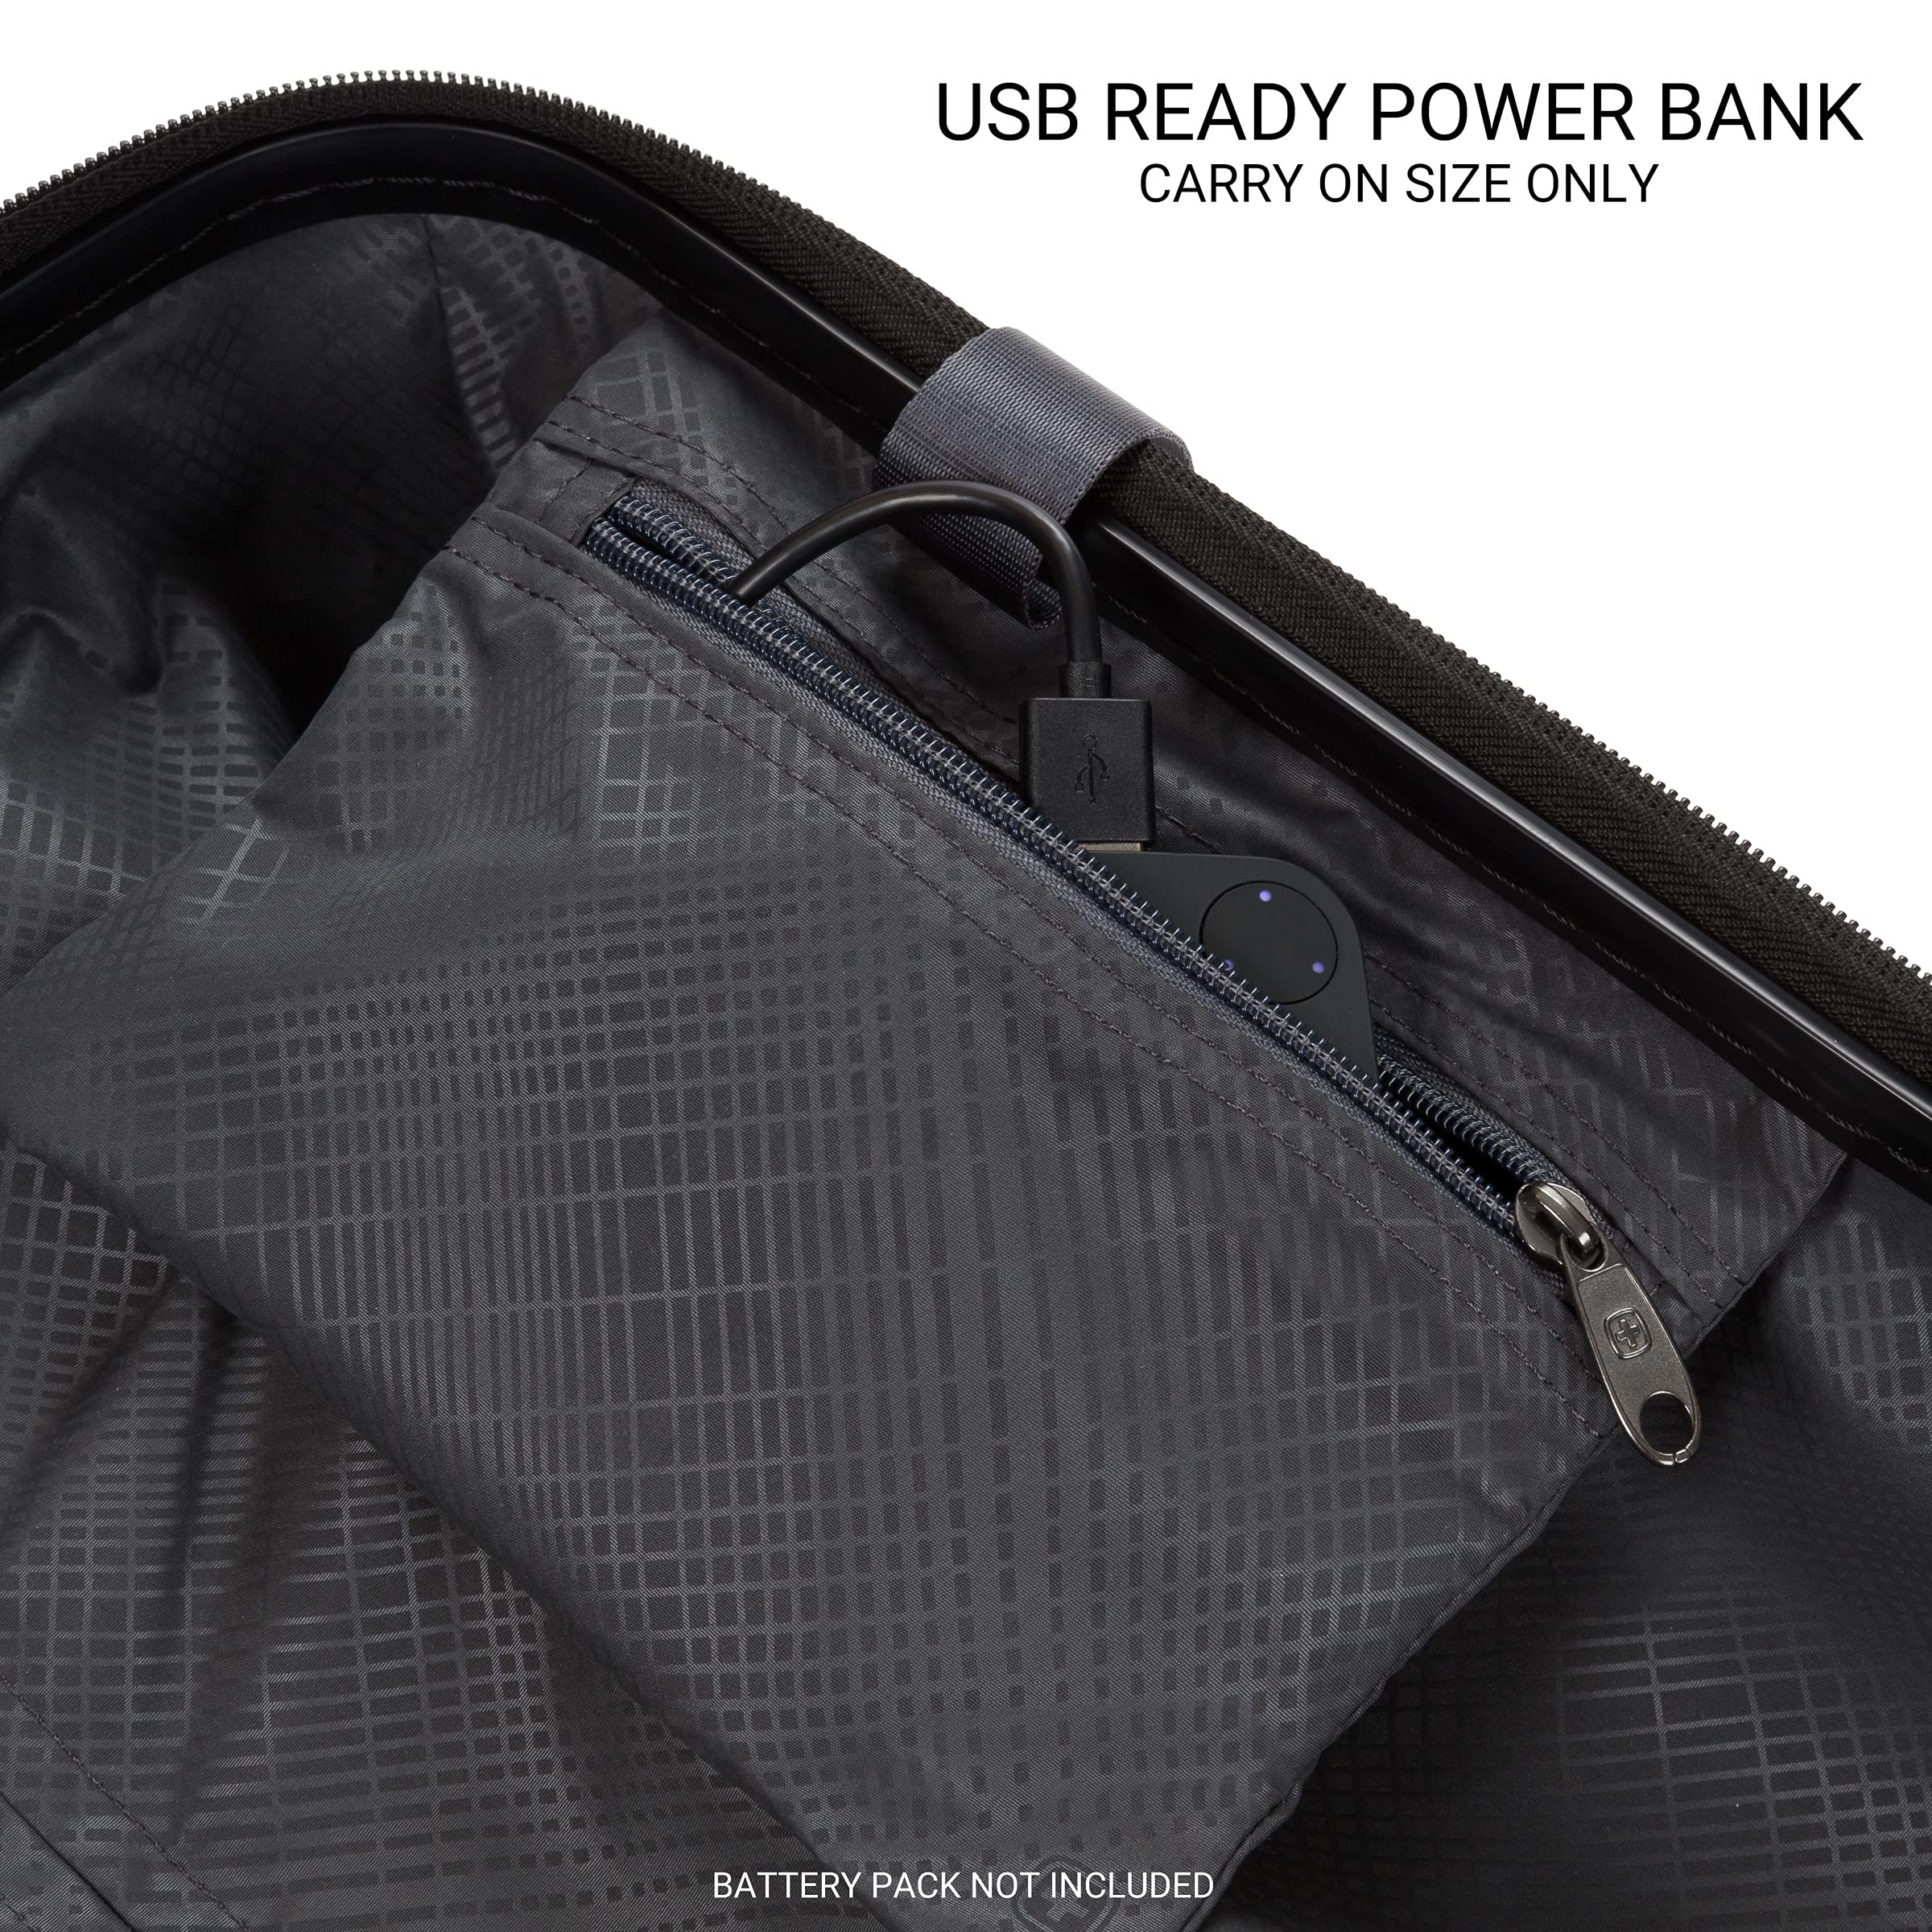 SwissGear 7910 Hardside Expandable Luggage with Spinner Wheels, TSA Lock and USB, Black, 2-Piece Set (20/27)